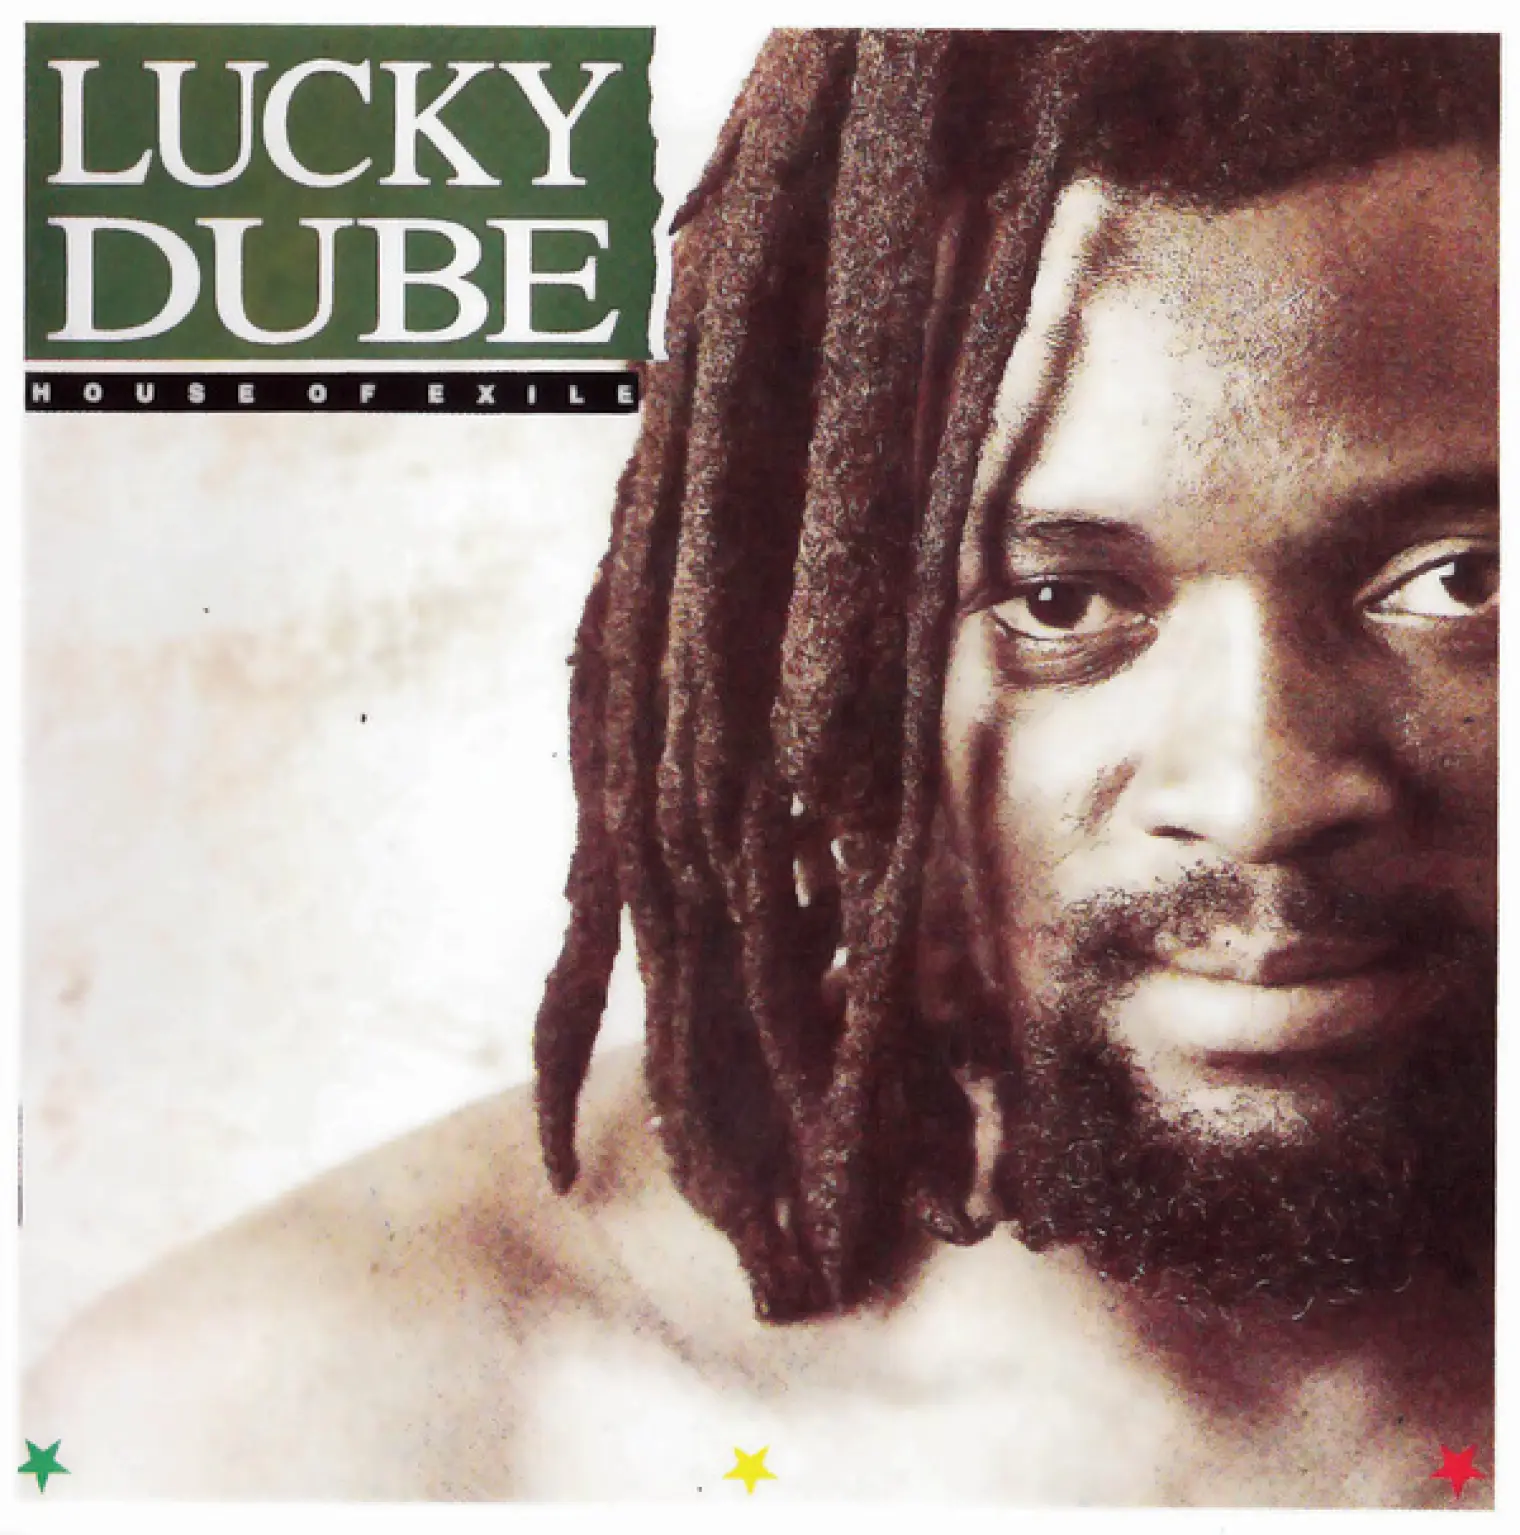 House of Exile -  Lucky Dube 